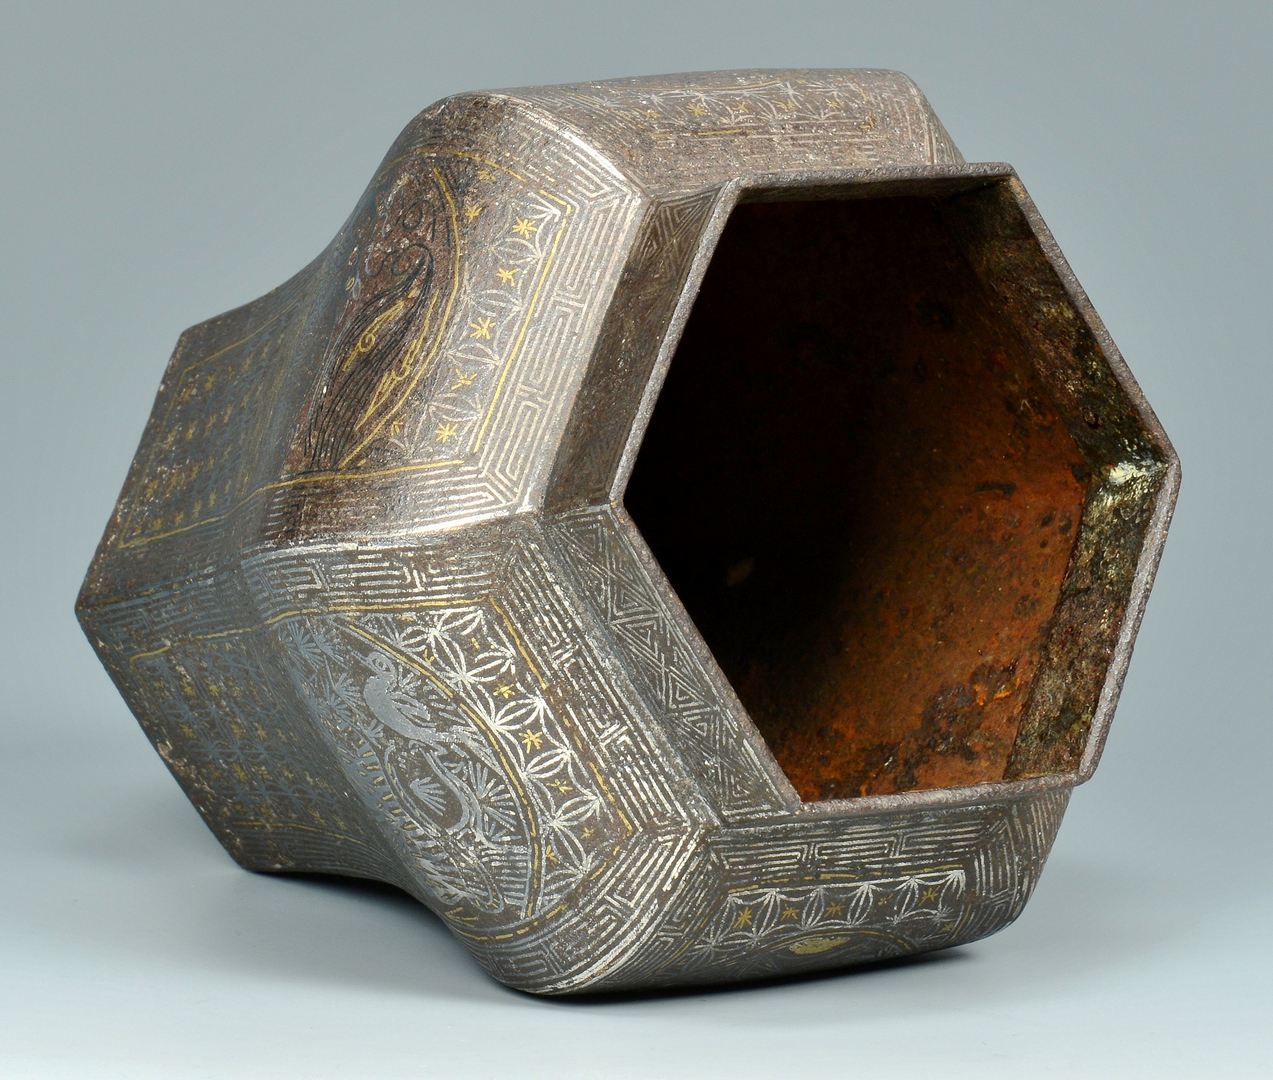 Lot 3088129: Asian Iron Hexagonal Vase w/ Silver & Gold Inlay